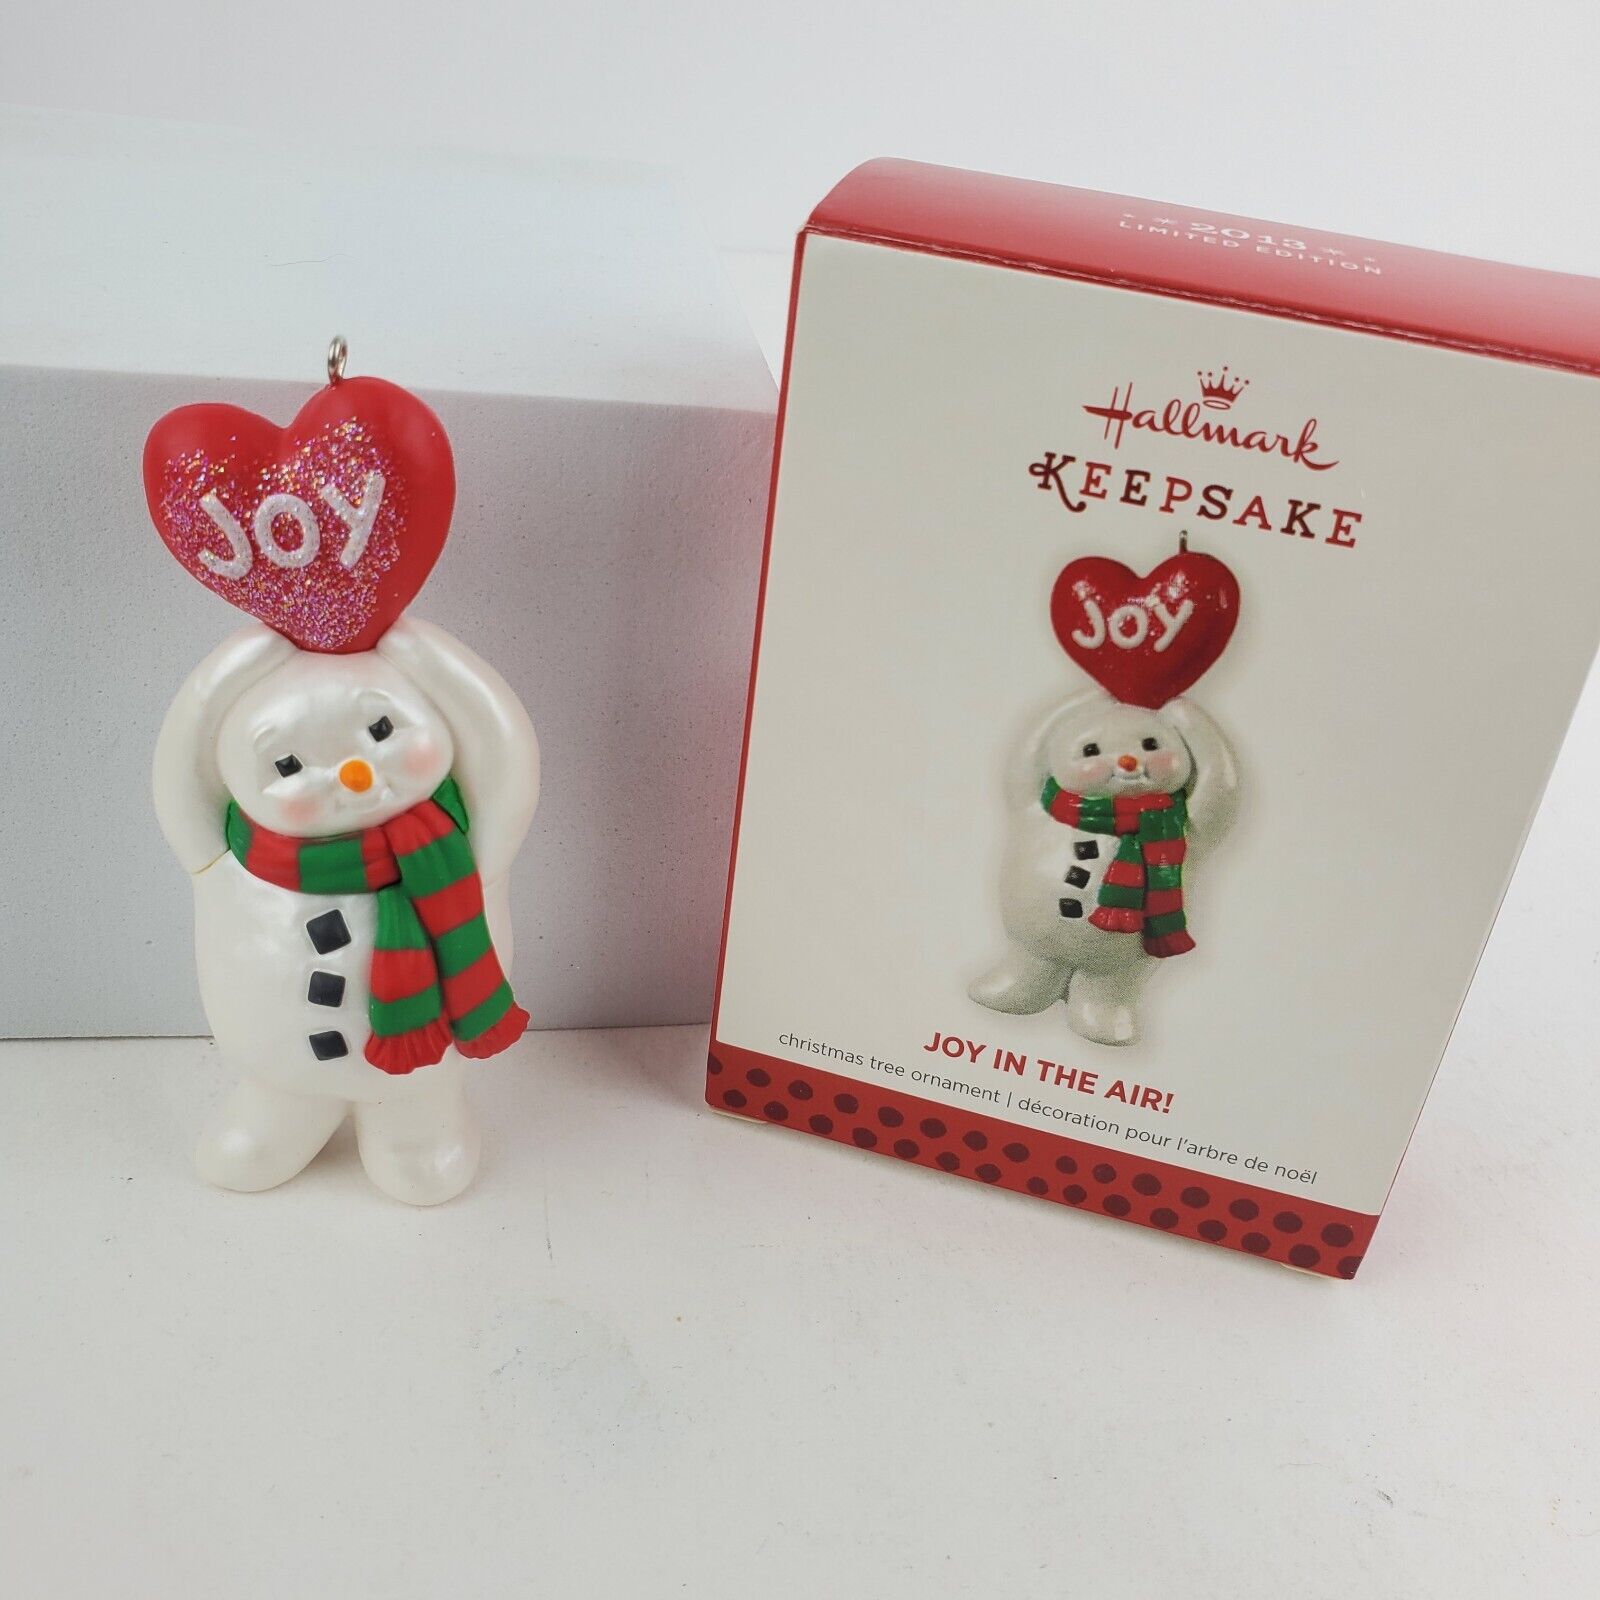 2013 Hallmark Keepsake Joy In The Air Snowman Ornament